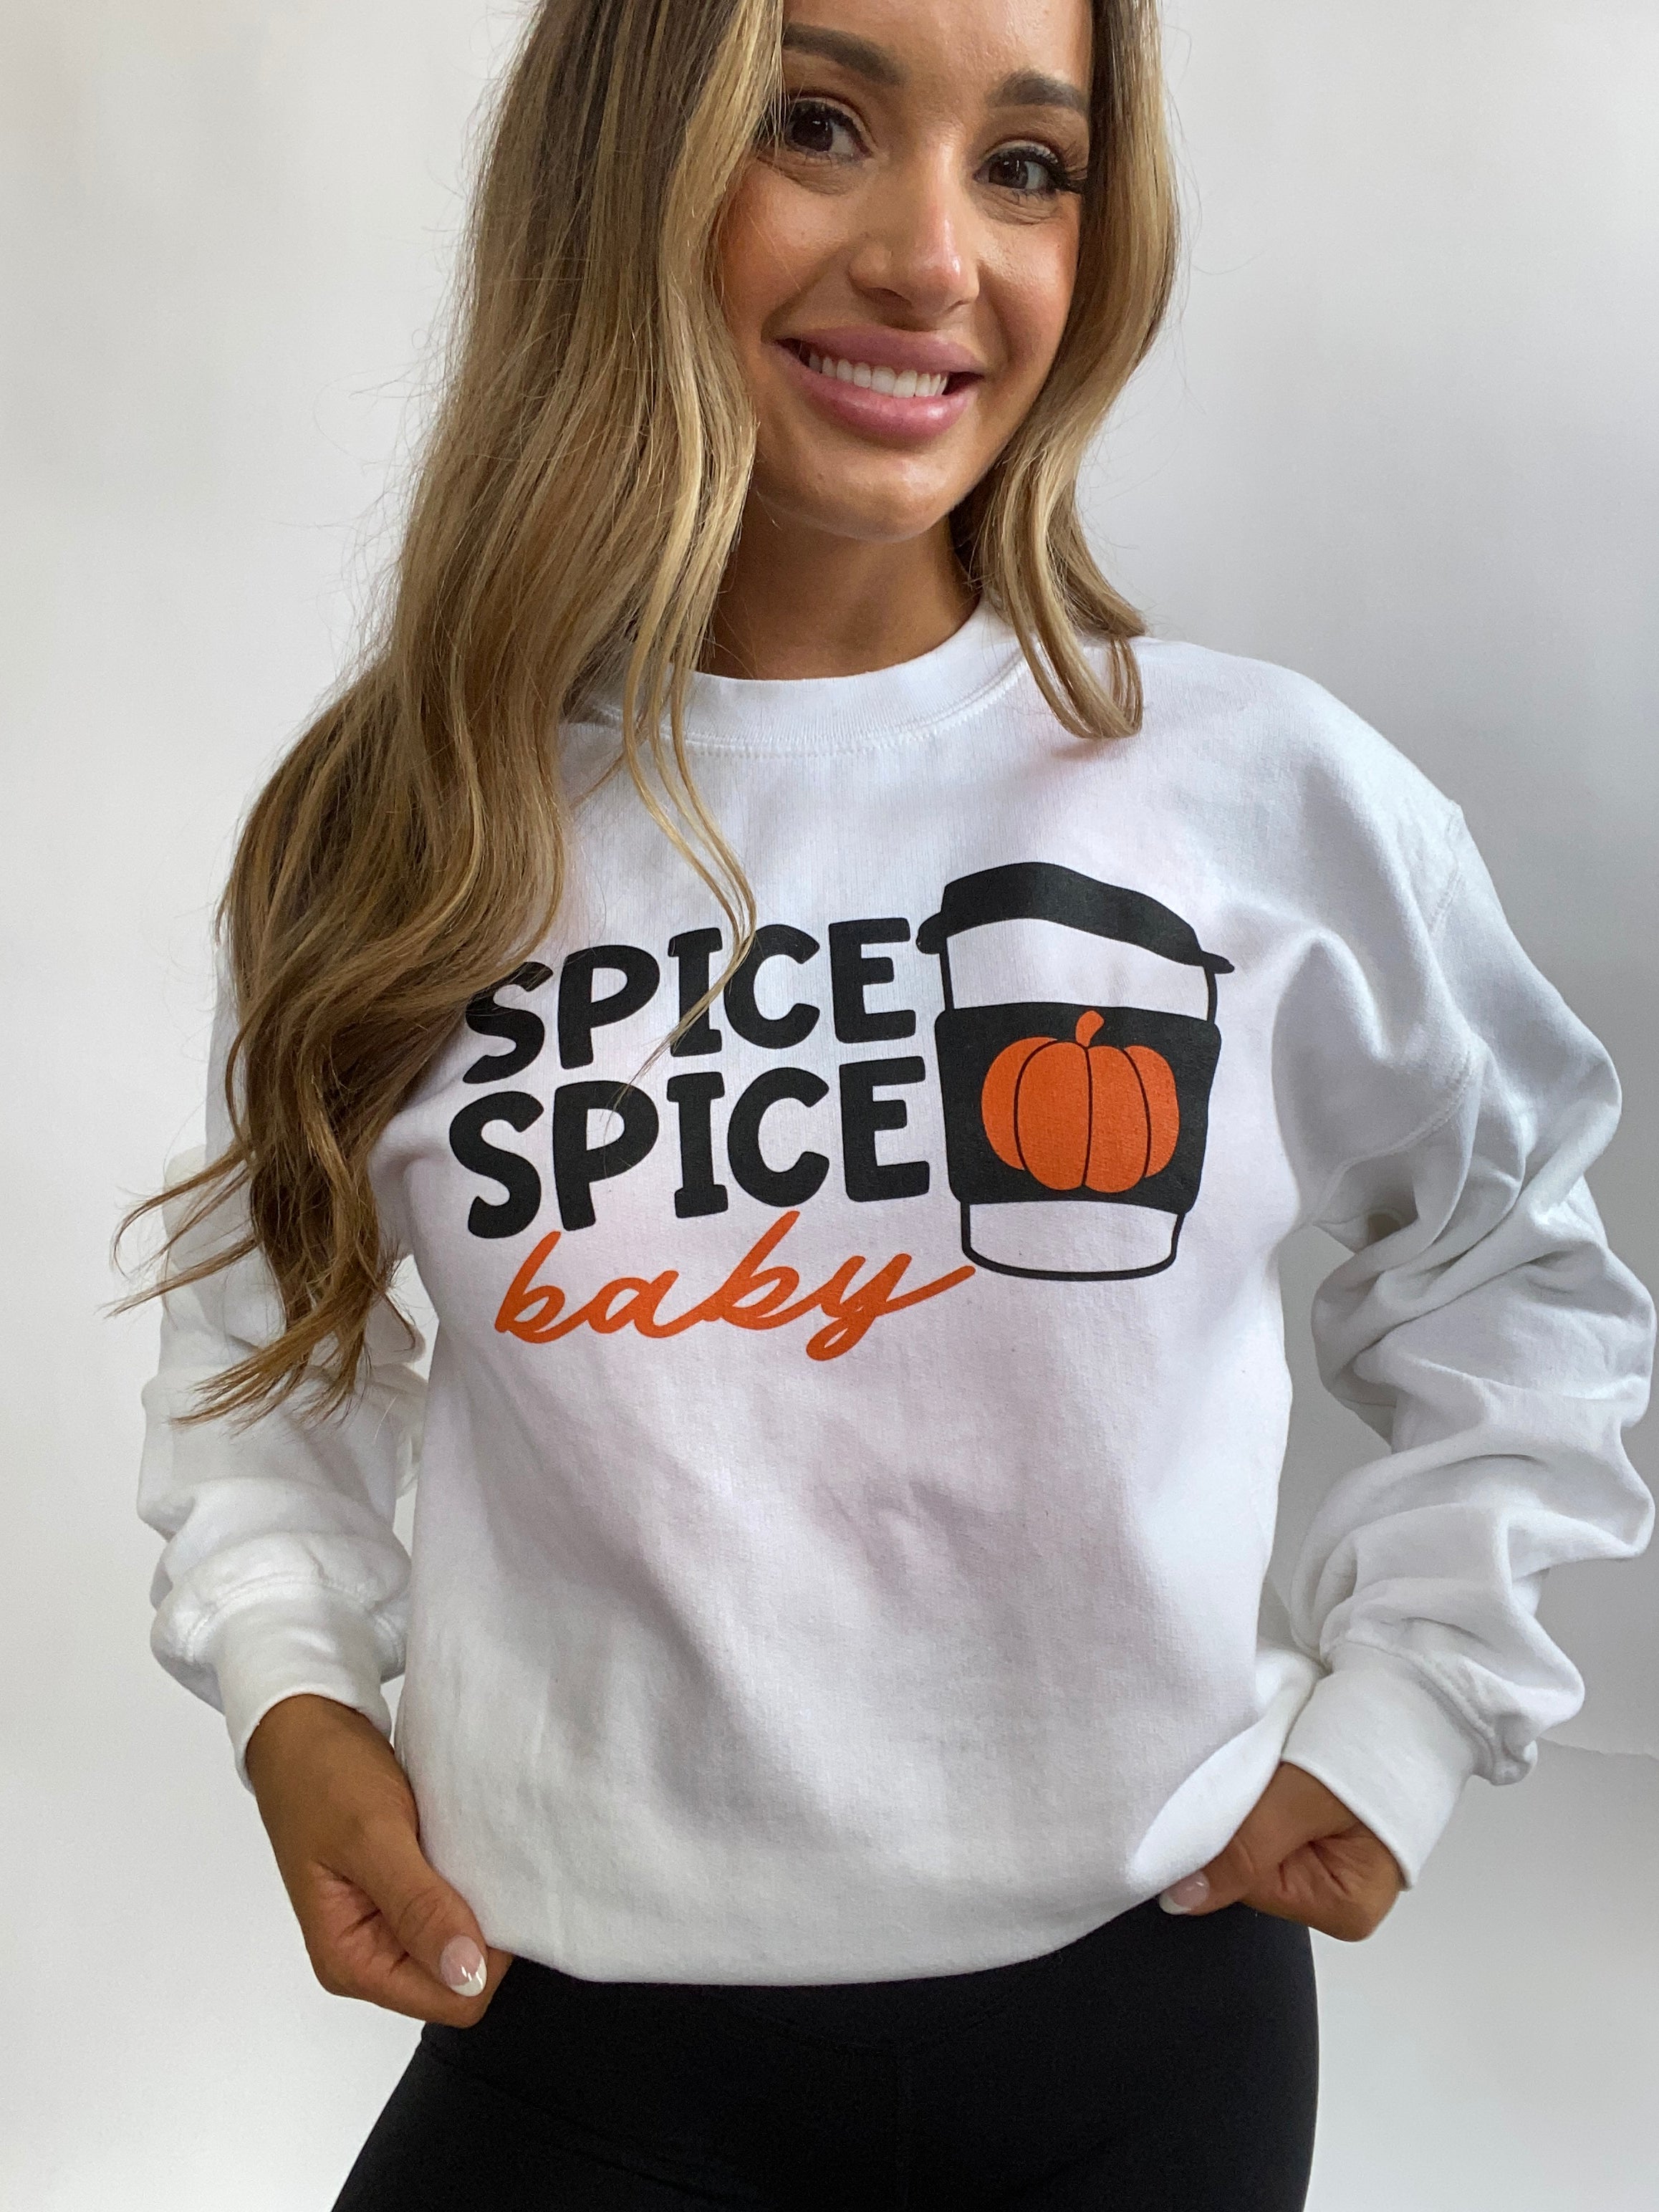 Spice Spice Baby - White